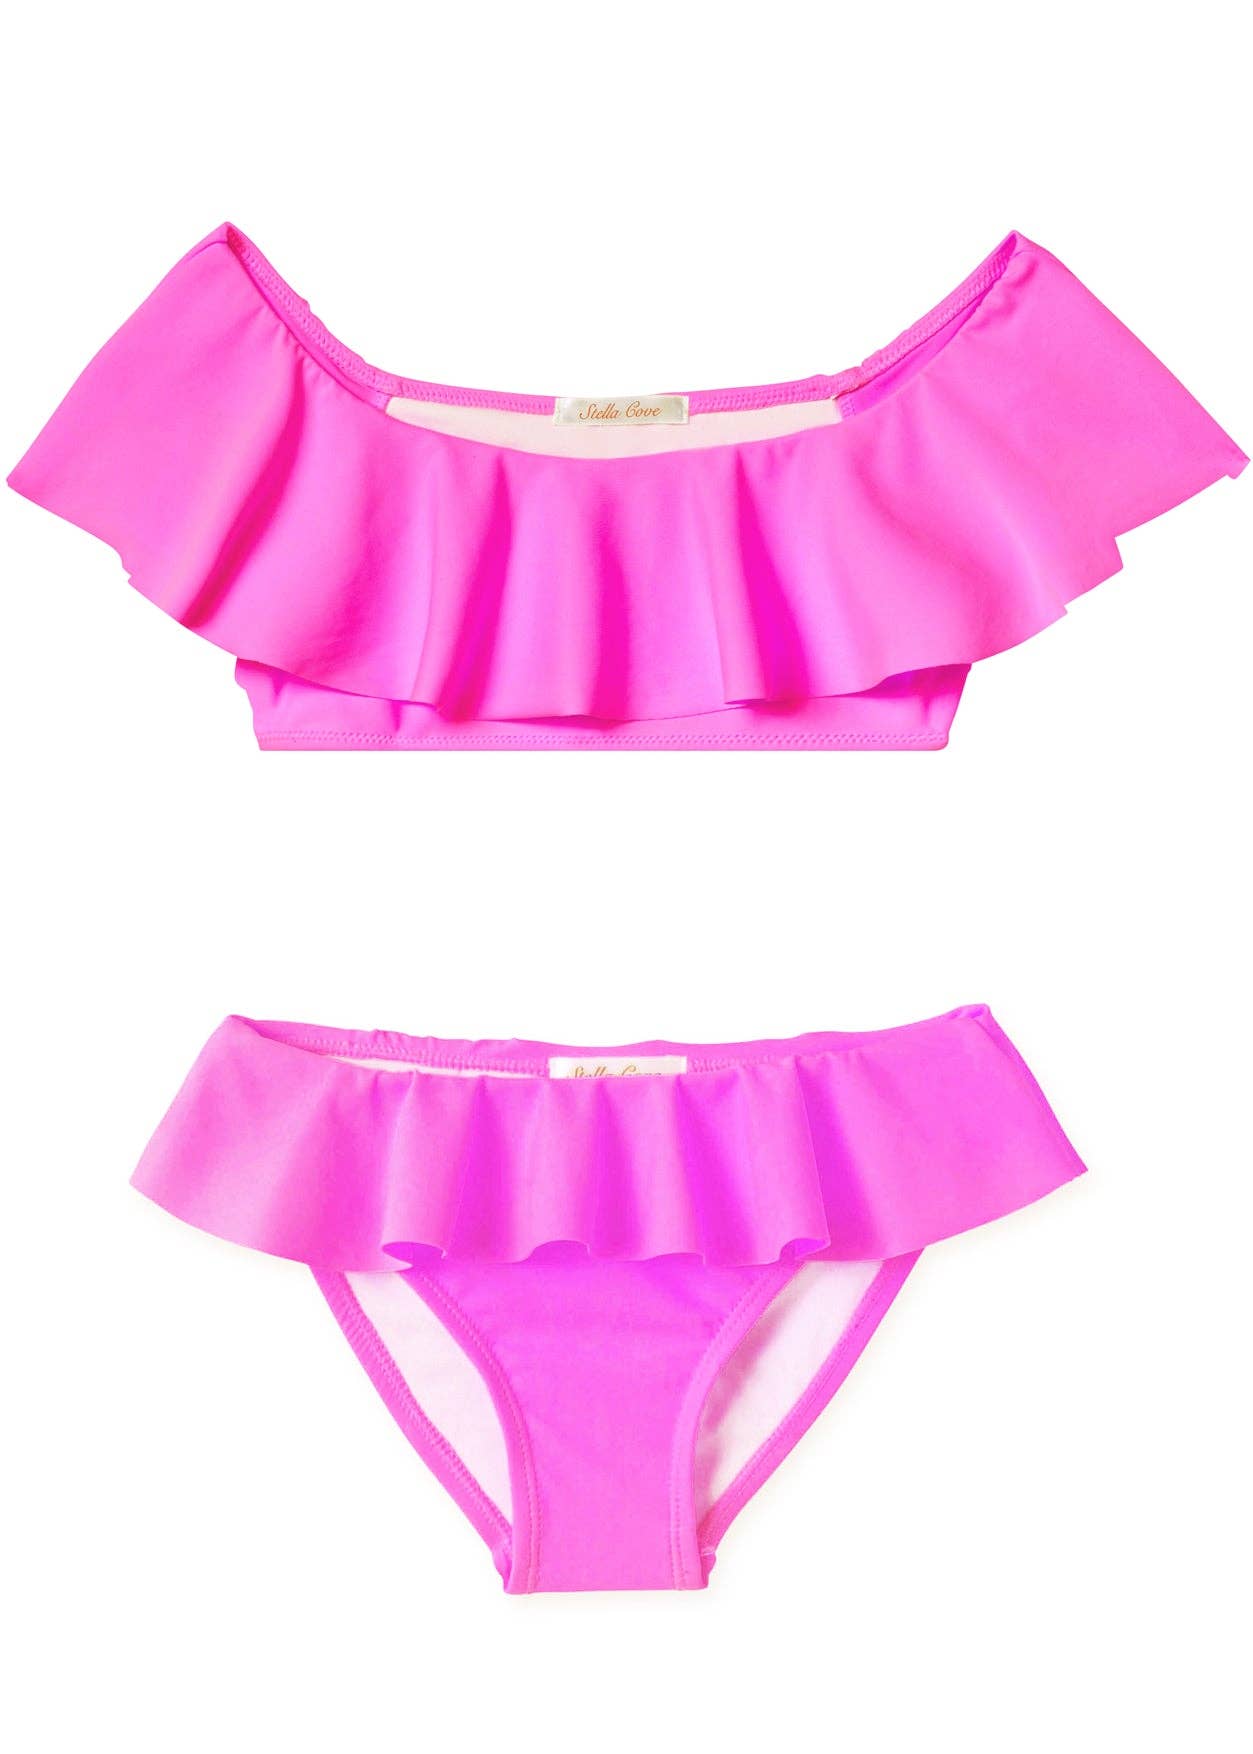 Neon Pink Ruffle Bikini - Something about Sofia